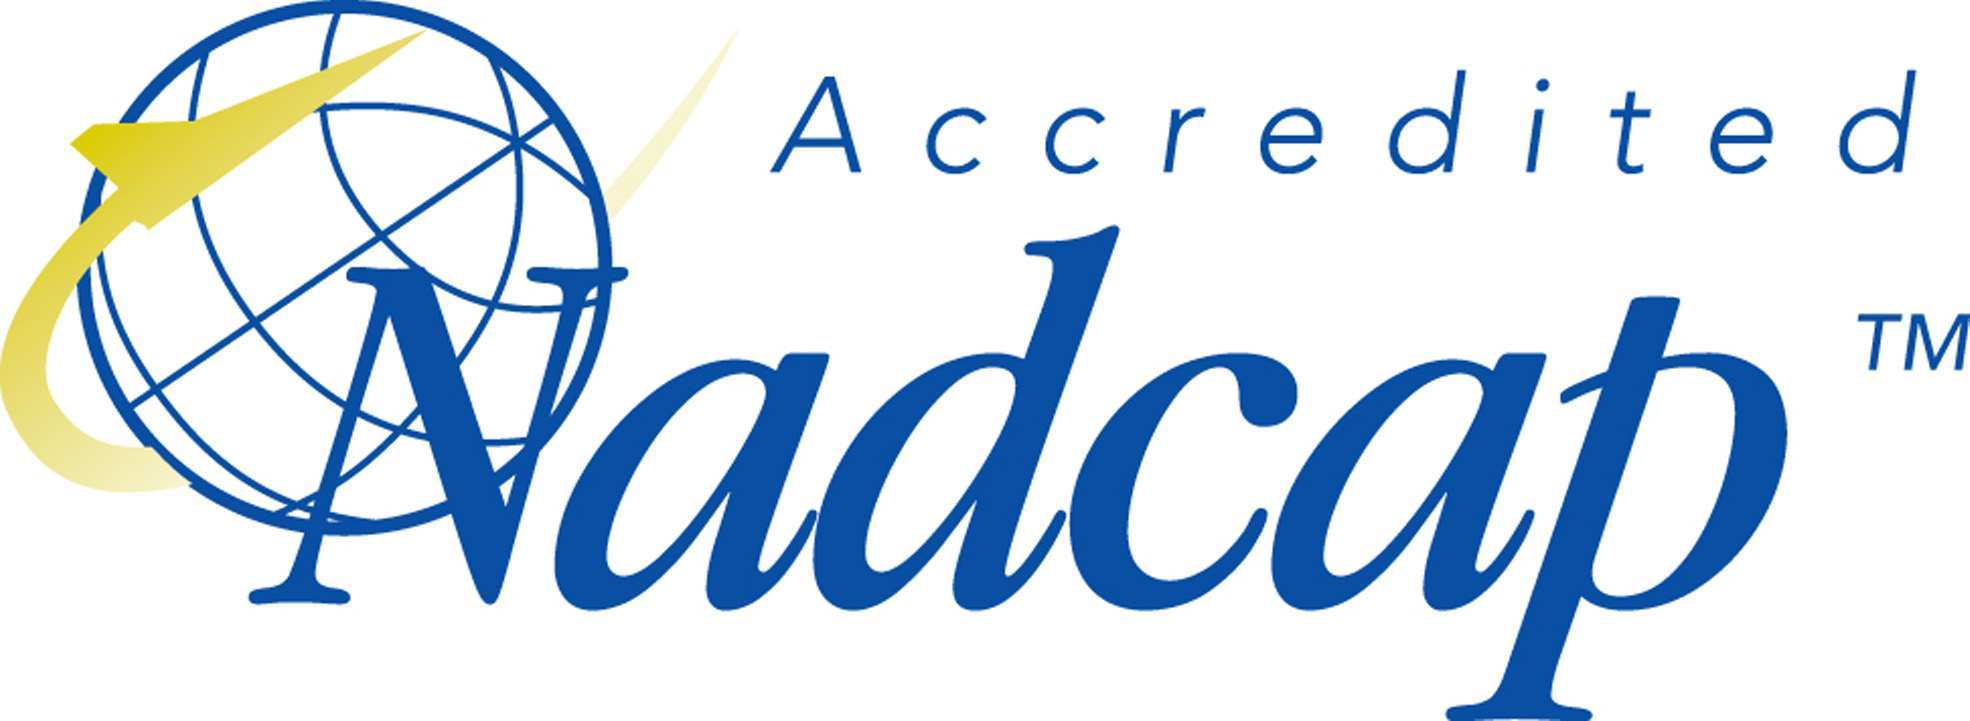 Wheelabrator Impact Nadcap accreditation